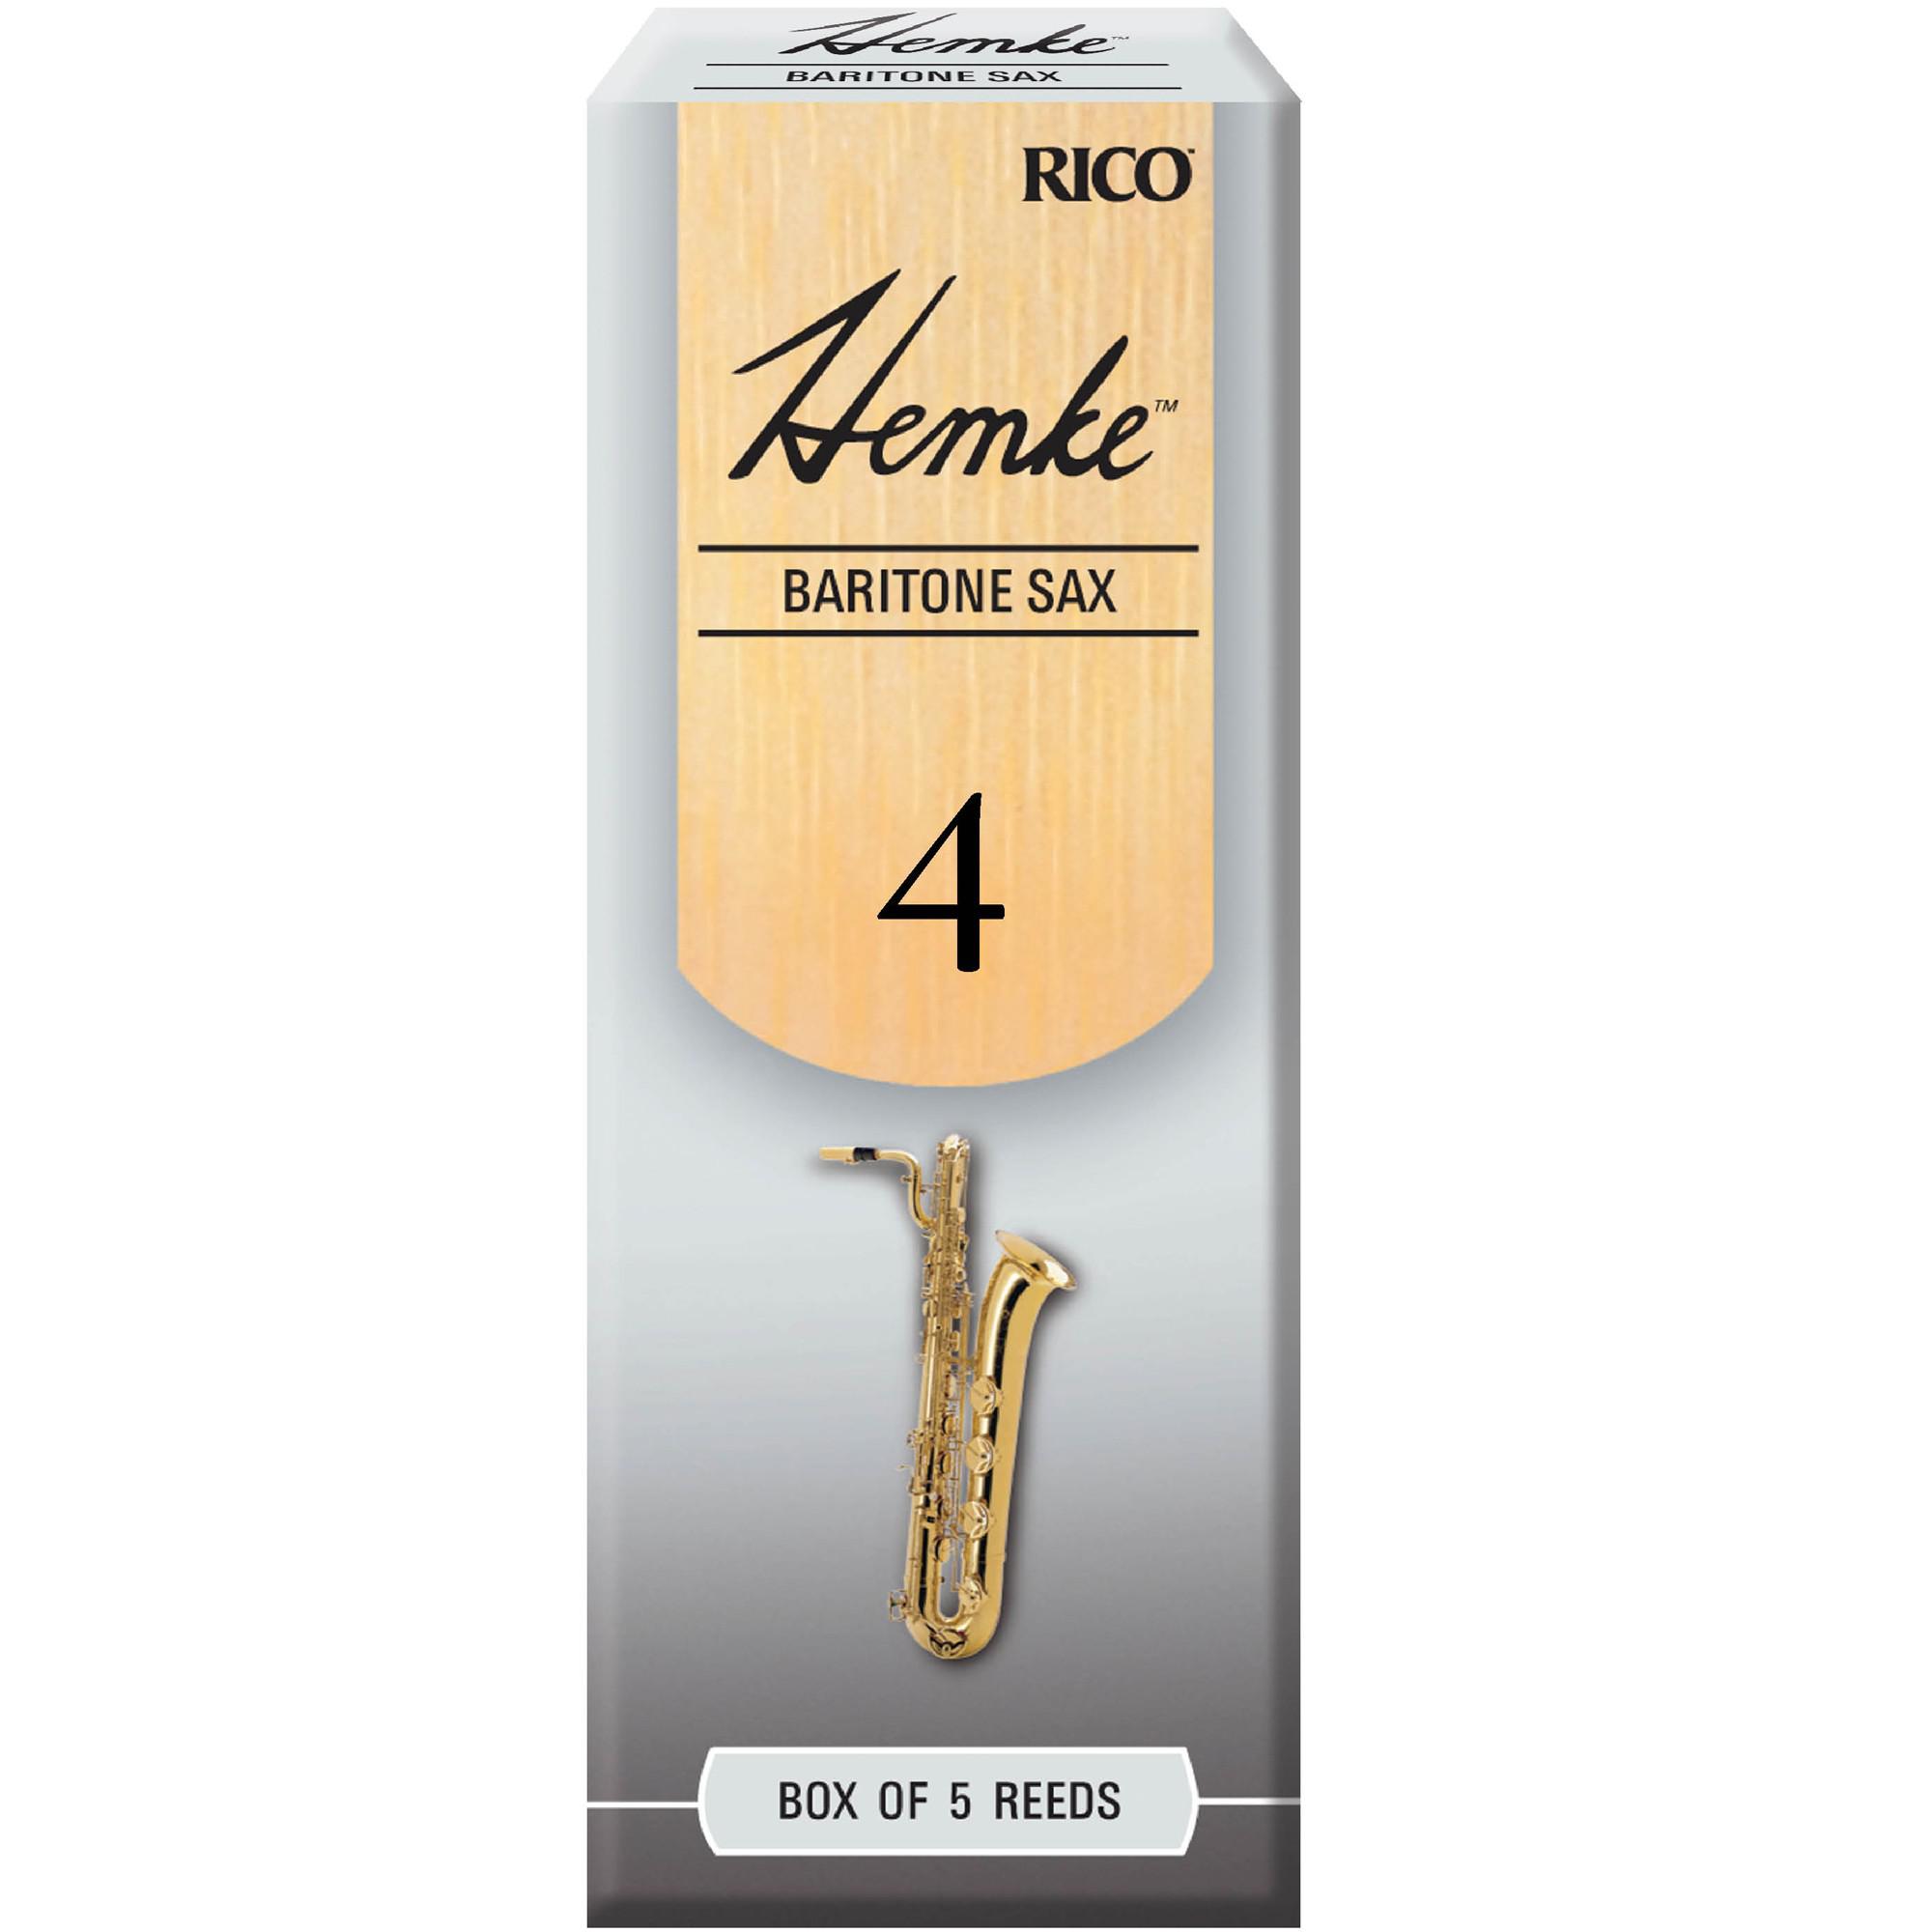 D'Addario - 5 Cañas Hemke para Sax Baritono, Medida: 4 Mod.RHKP5BSX400(5)_32